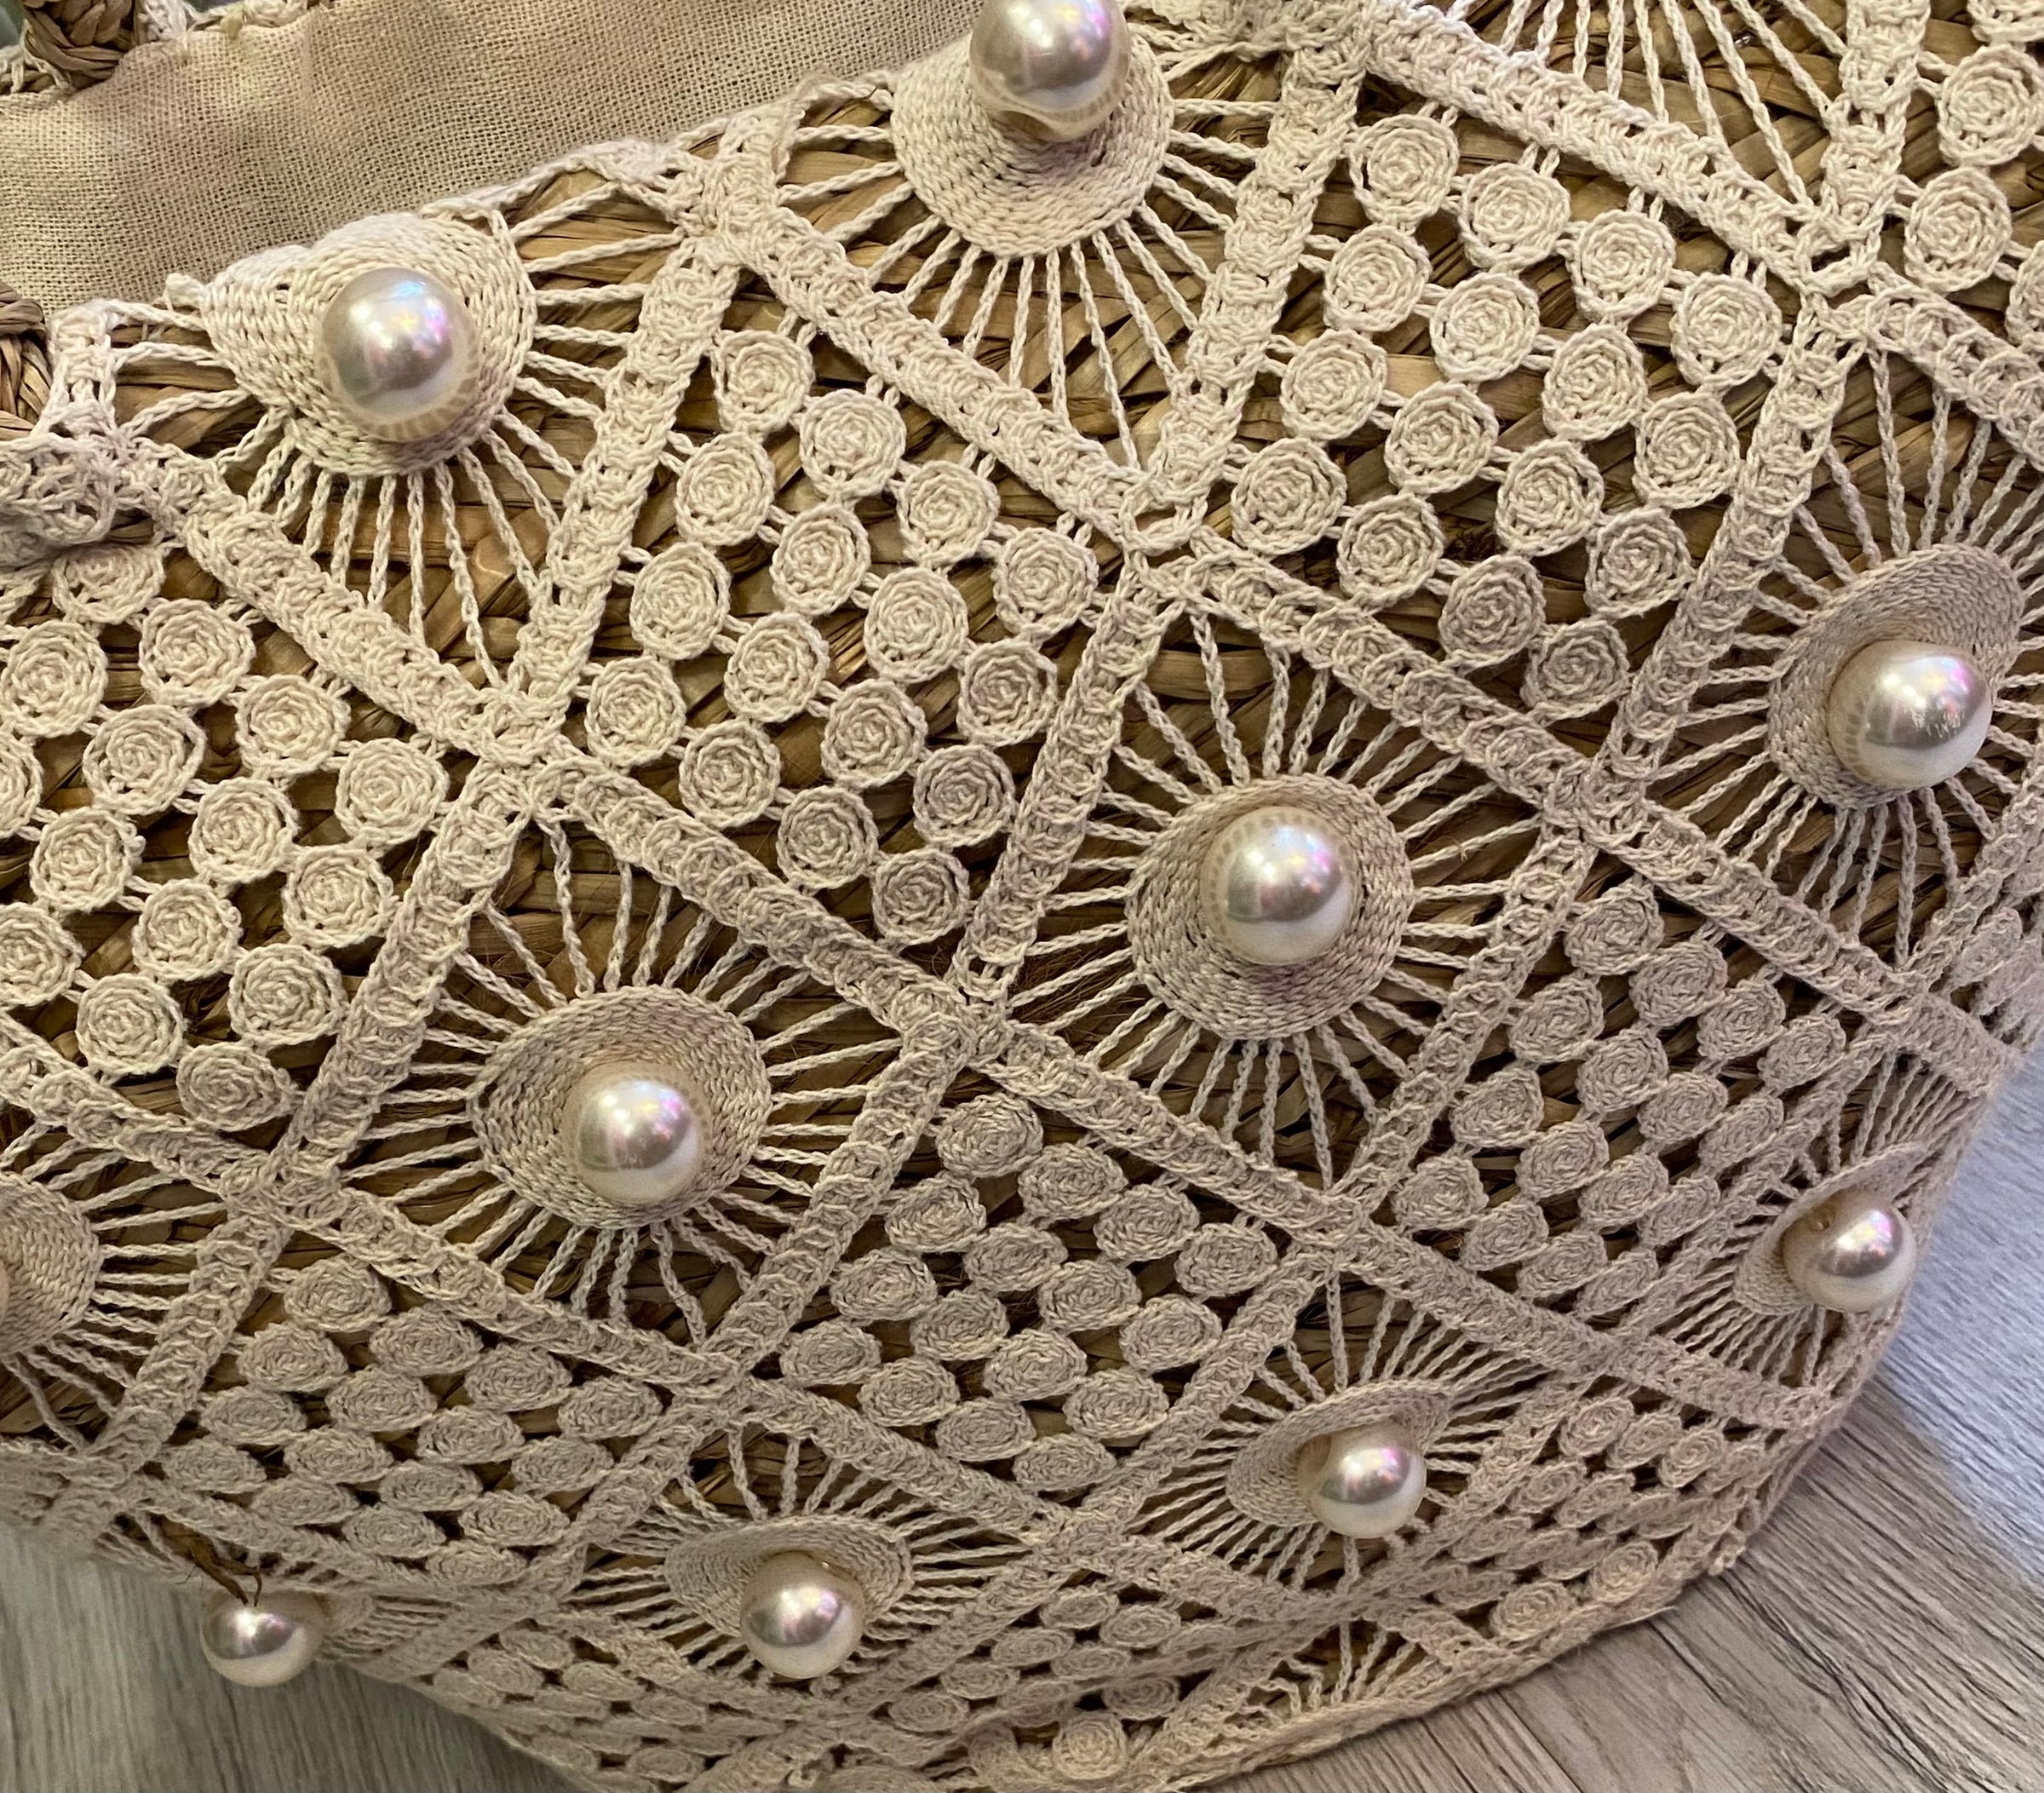 Delilah Crochet Bag in Beige